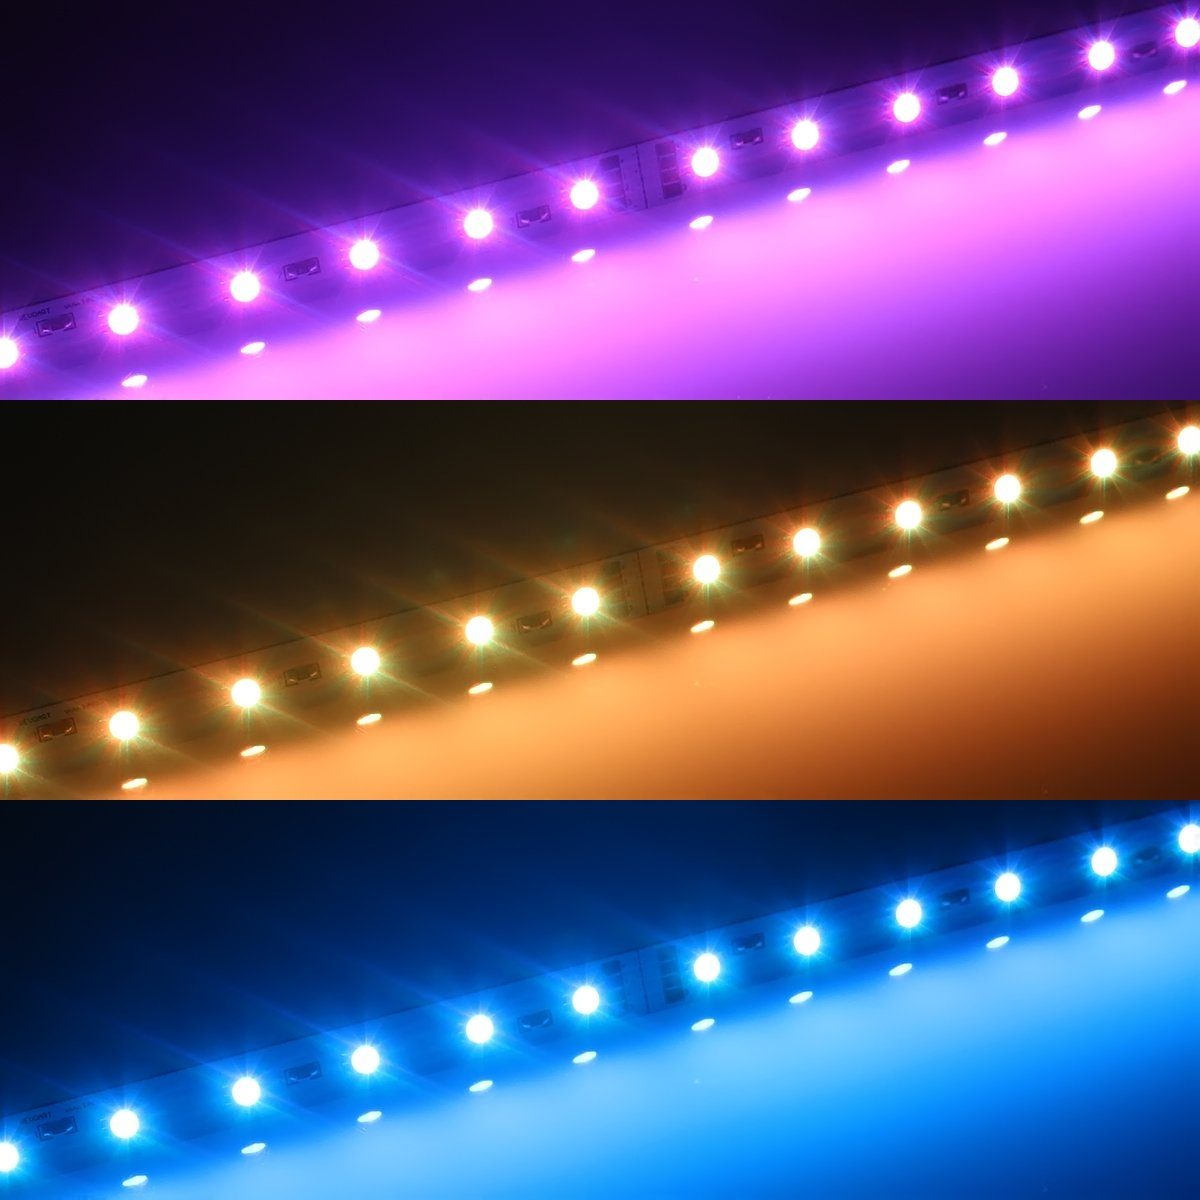 Ogeled LED-Lichterkette 24V LED RGB Party-Lichterkette 25cm, Modul Hintergrundbeleuchtung, dimmbar, Farbwechsel, Bunt, schmal, Farbwechsel